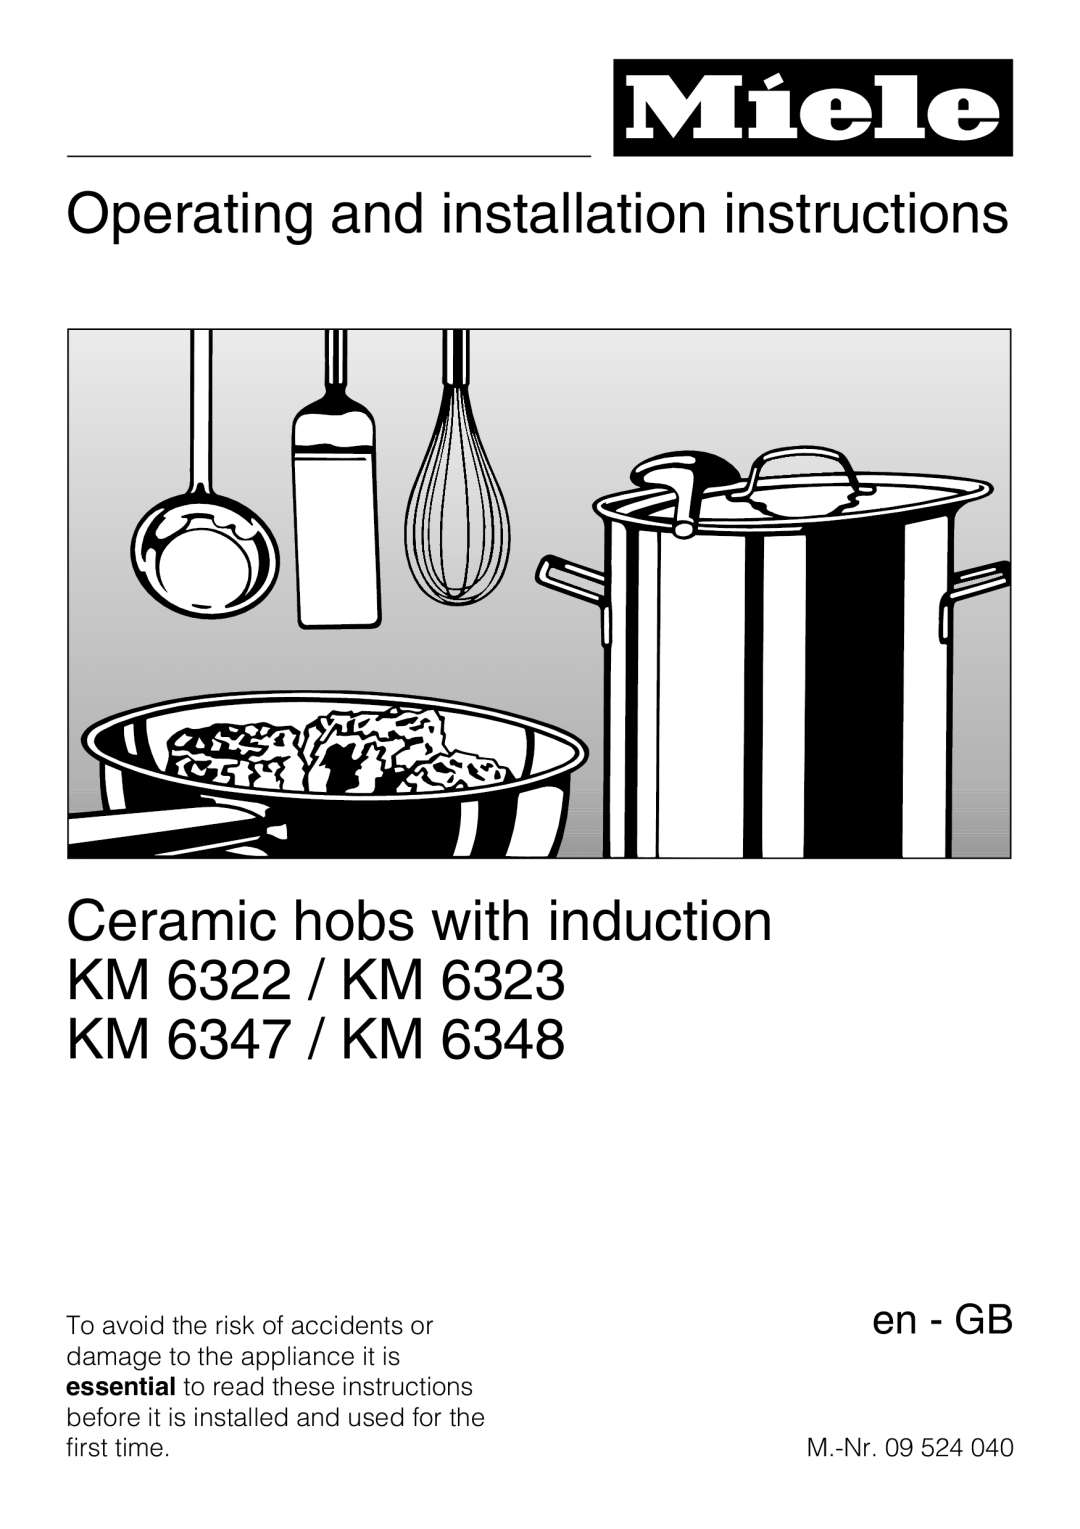 Miele KM6347 installation instructions Operating and installation instructions Ceramic hobs with induction, en - GB 